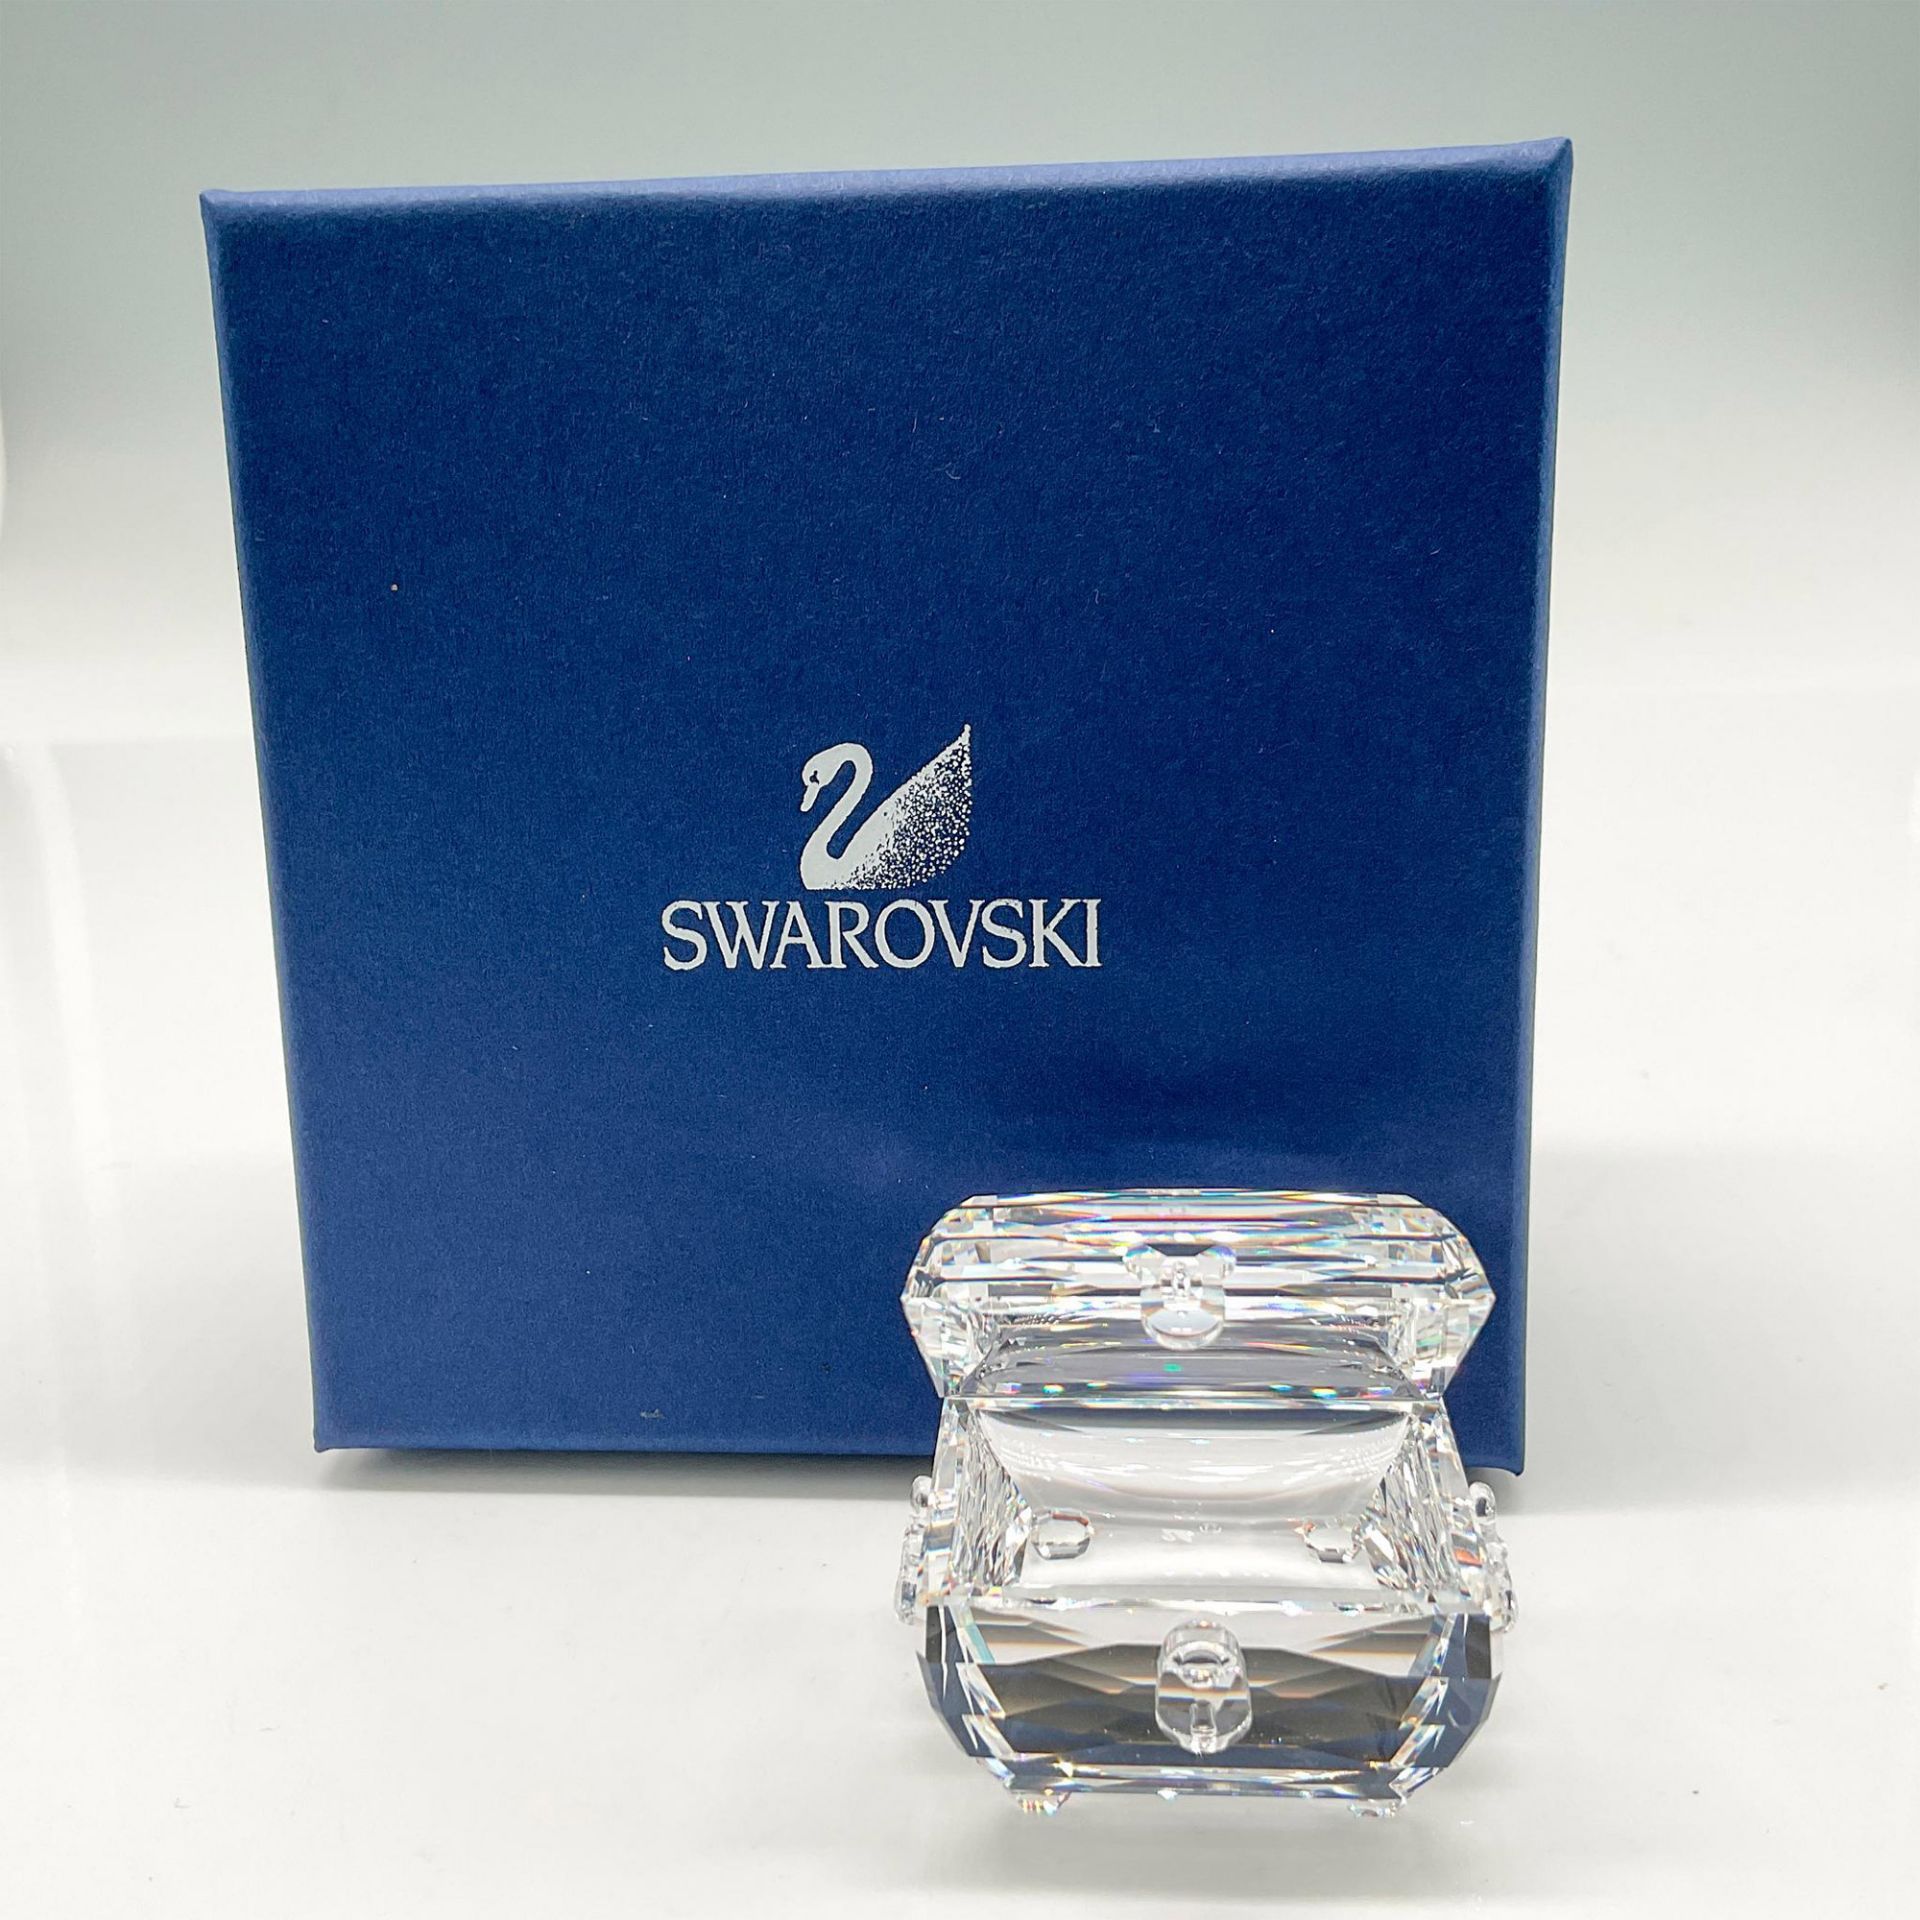 Swarovski Crystal Figurine, Treasure Chest - Image 4 of 4